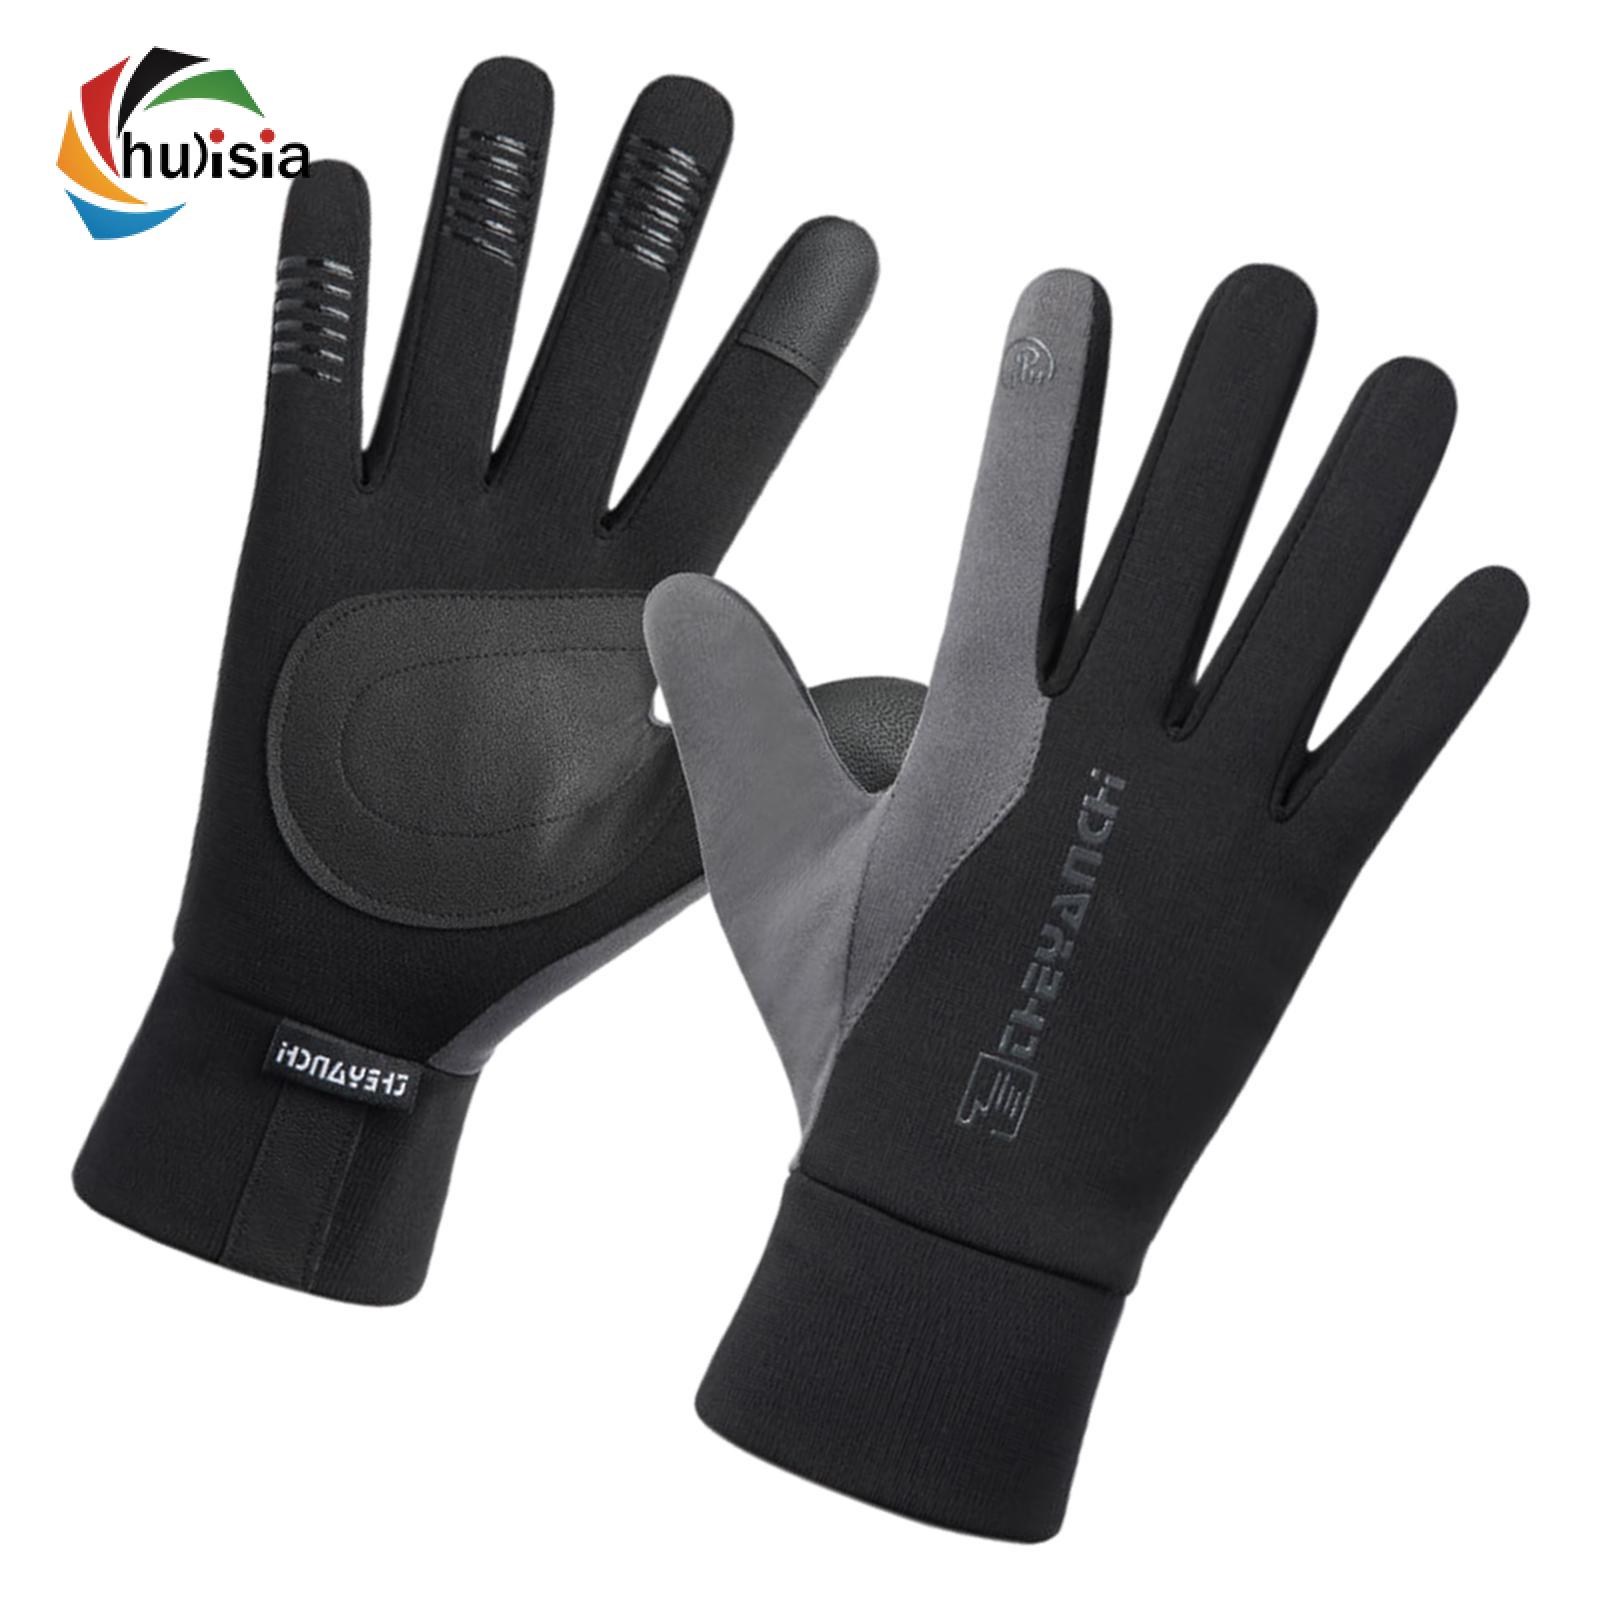 chulisia Thermal Gloves AntiSlip Touchscreen Full Finger Warm Waterproof